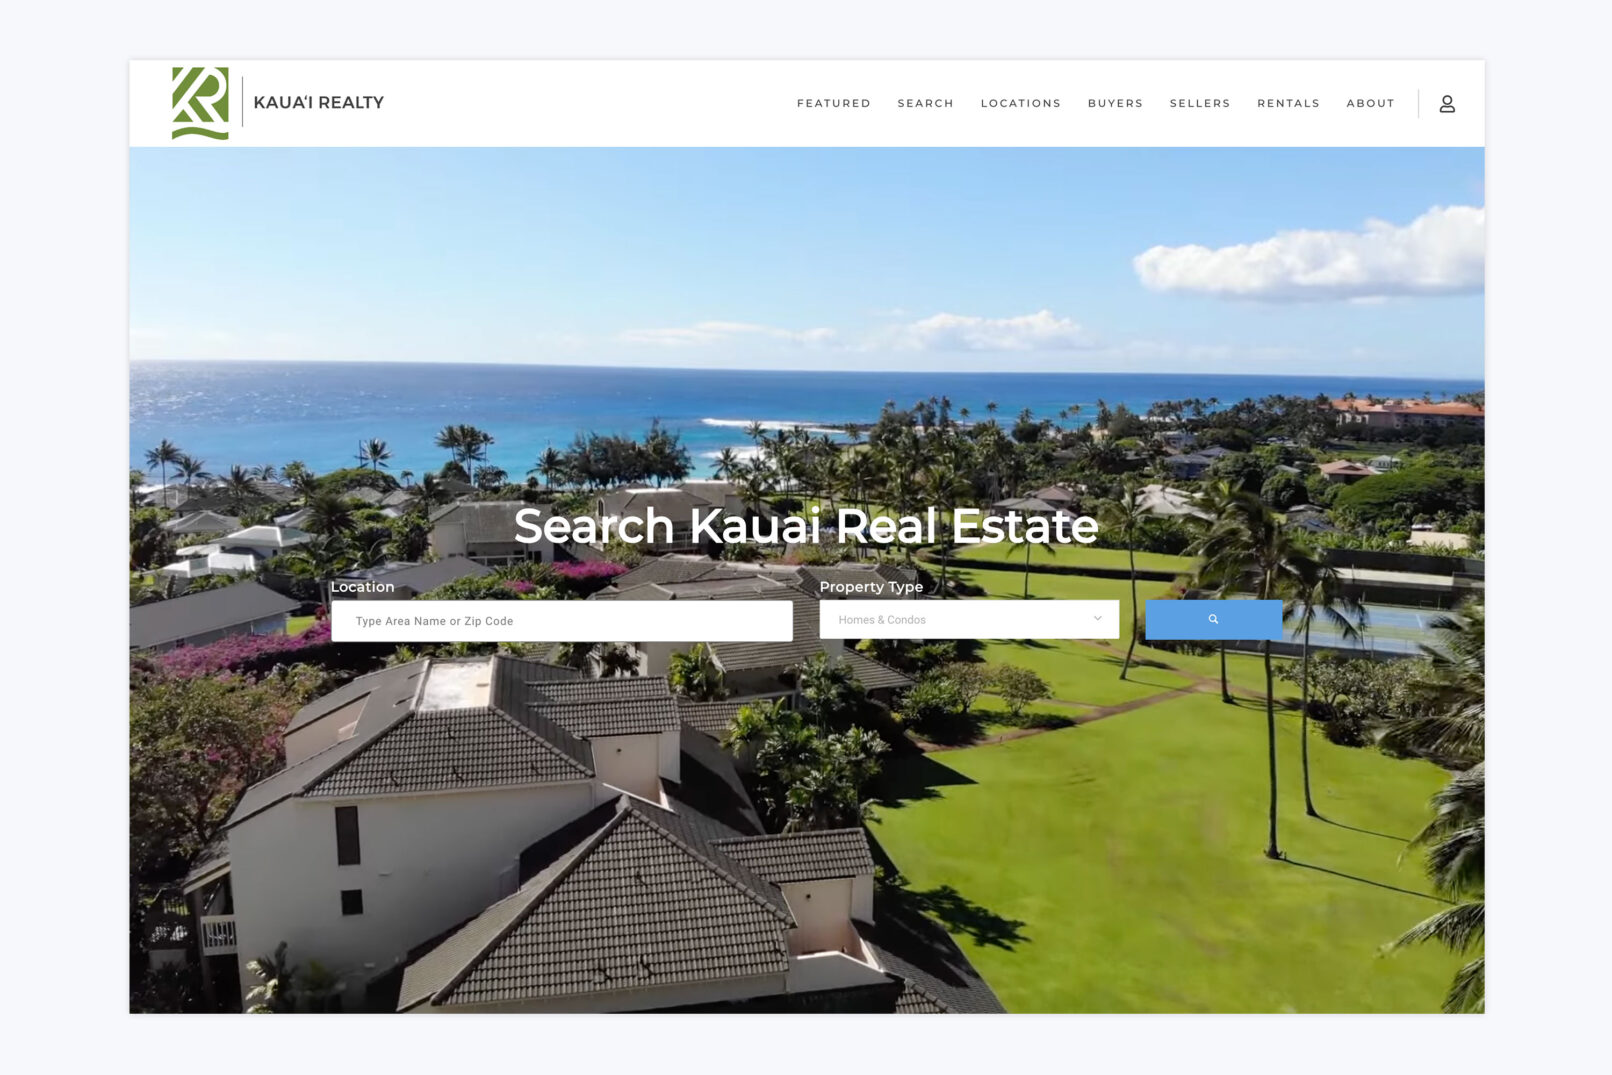 Skyfarm 808 Kauai Realty website image